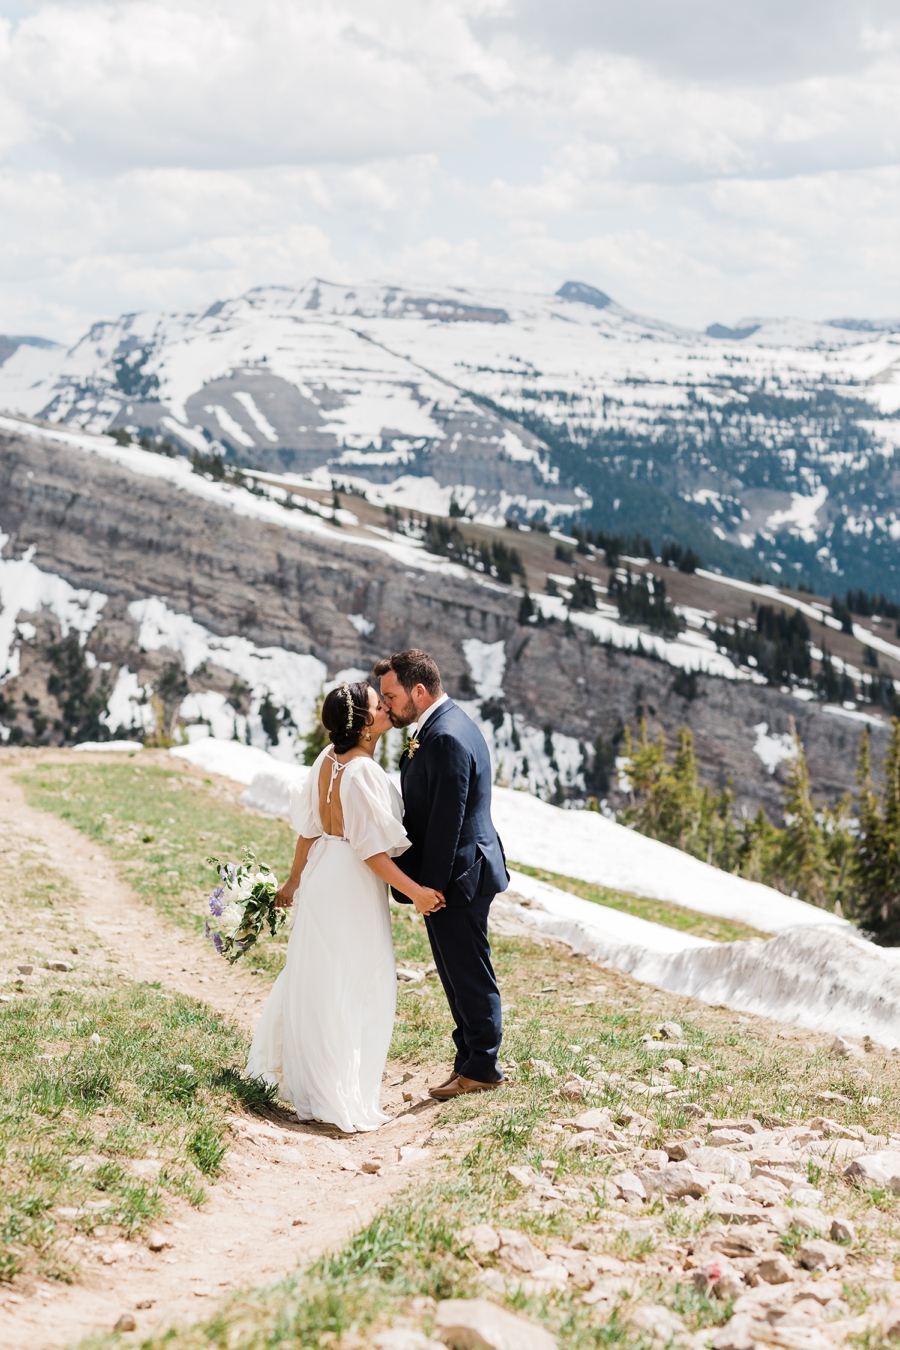 Romantic mountaintop photos in Jackson Hole at Grand Targhee Resort by Jackson Hole wedding photographer Amy Galbraith